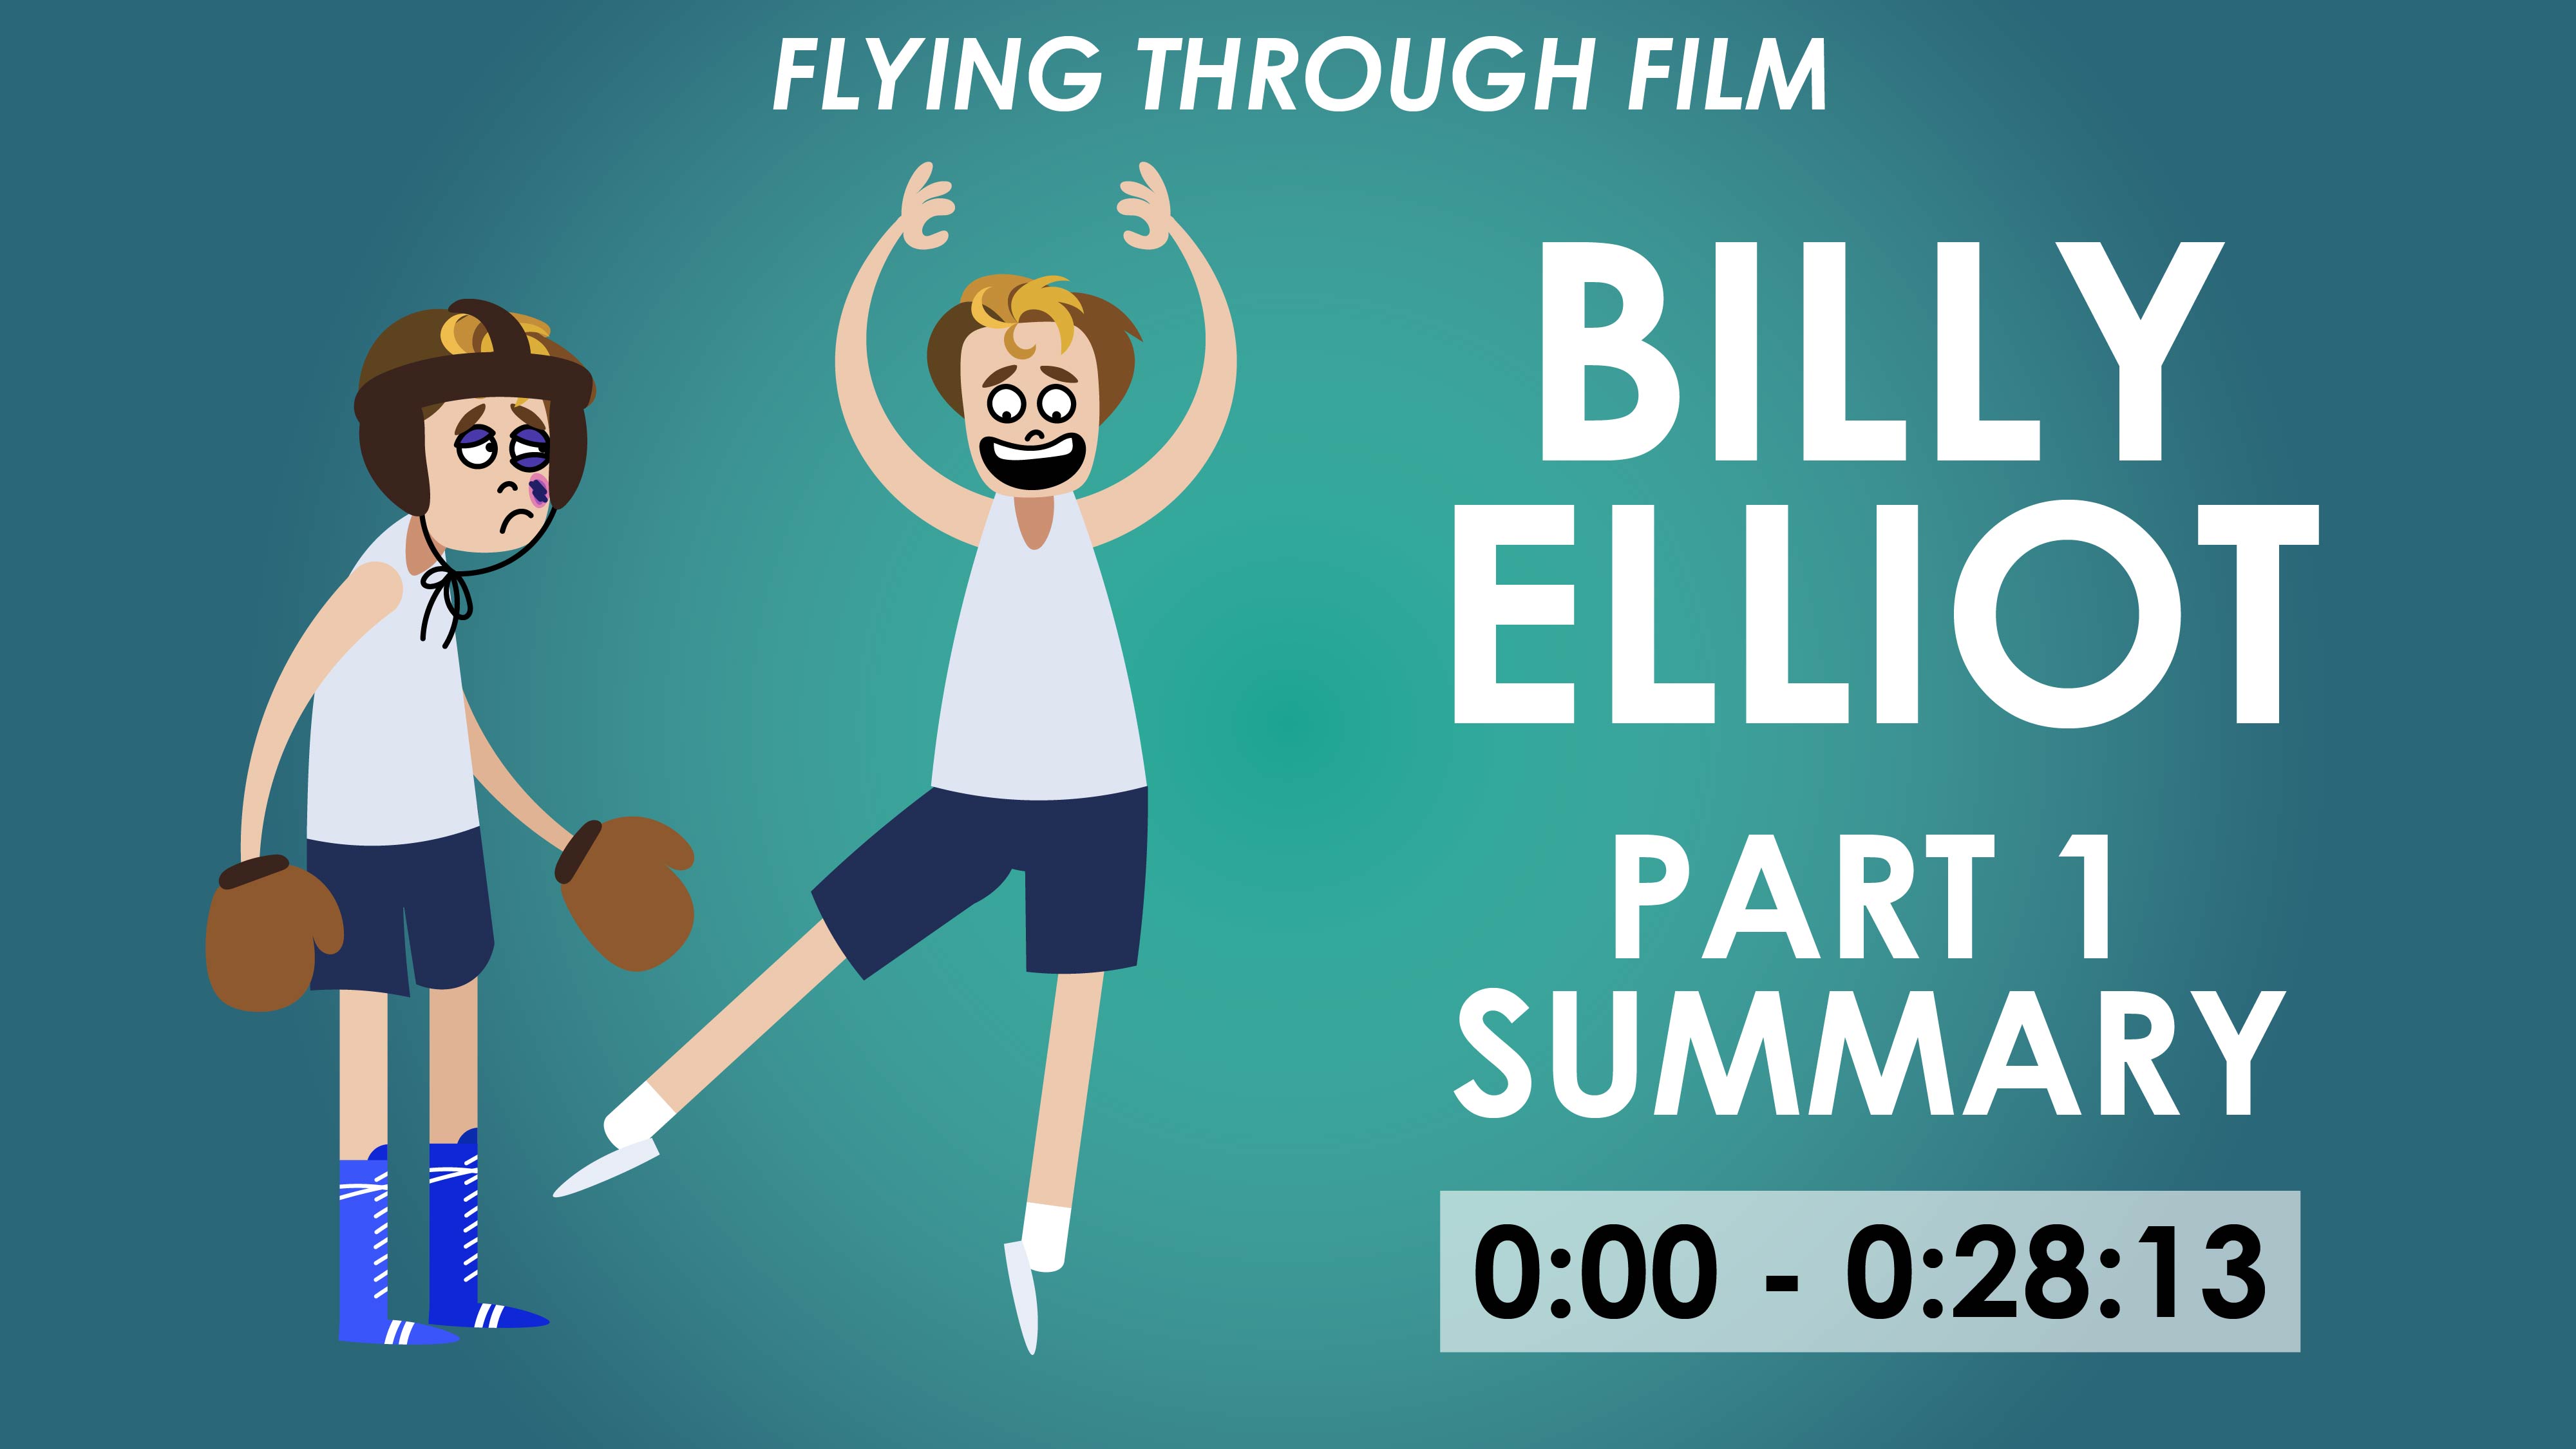 Billy Elliot - Part 1 Summary - Flying Through Film Series